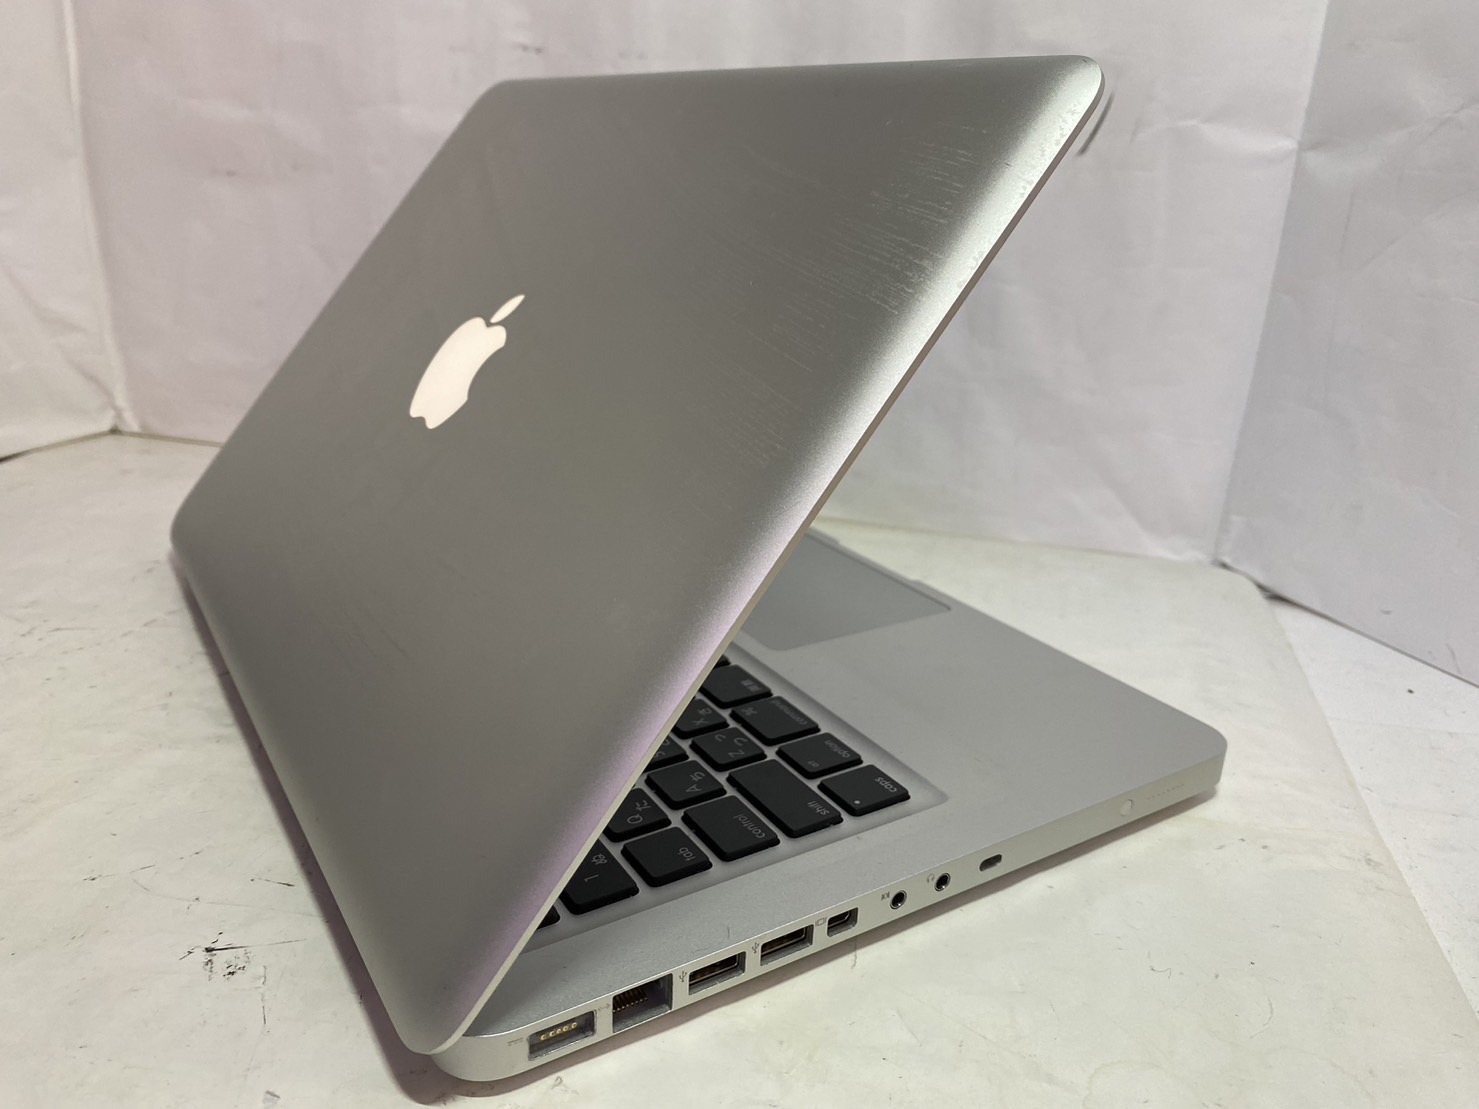 APPLE(アップル) MacBook Pro (13-inch, Mid 2008) A1278の激安通販 